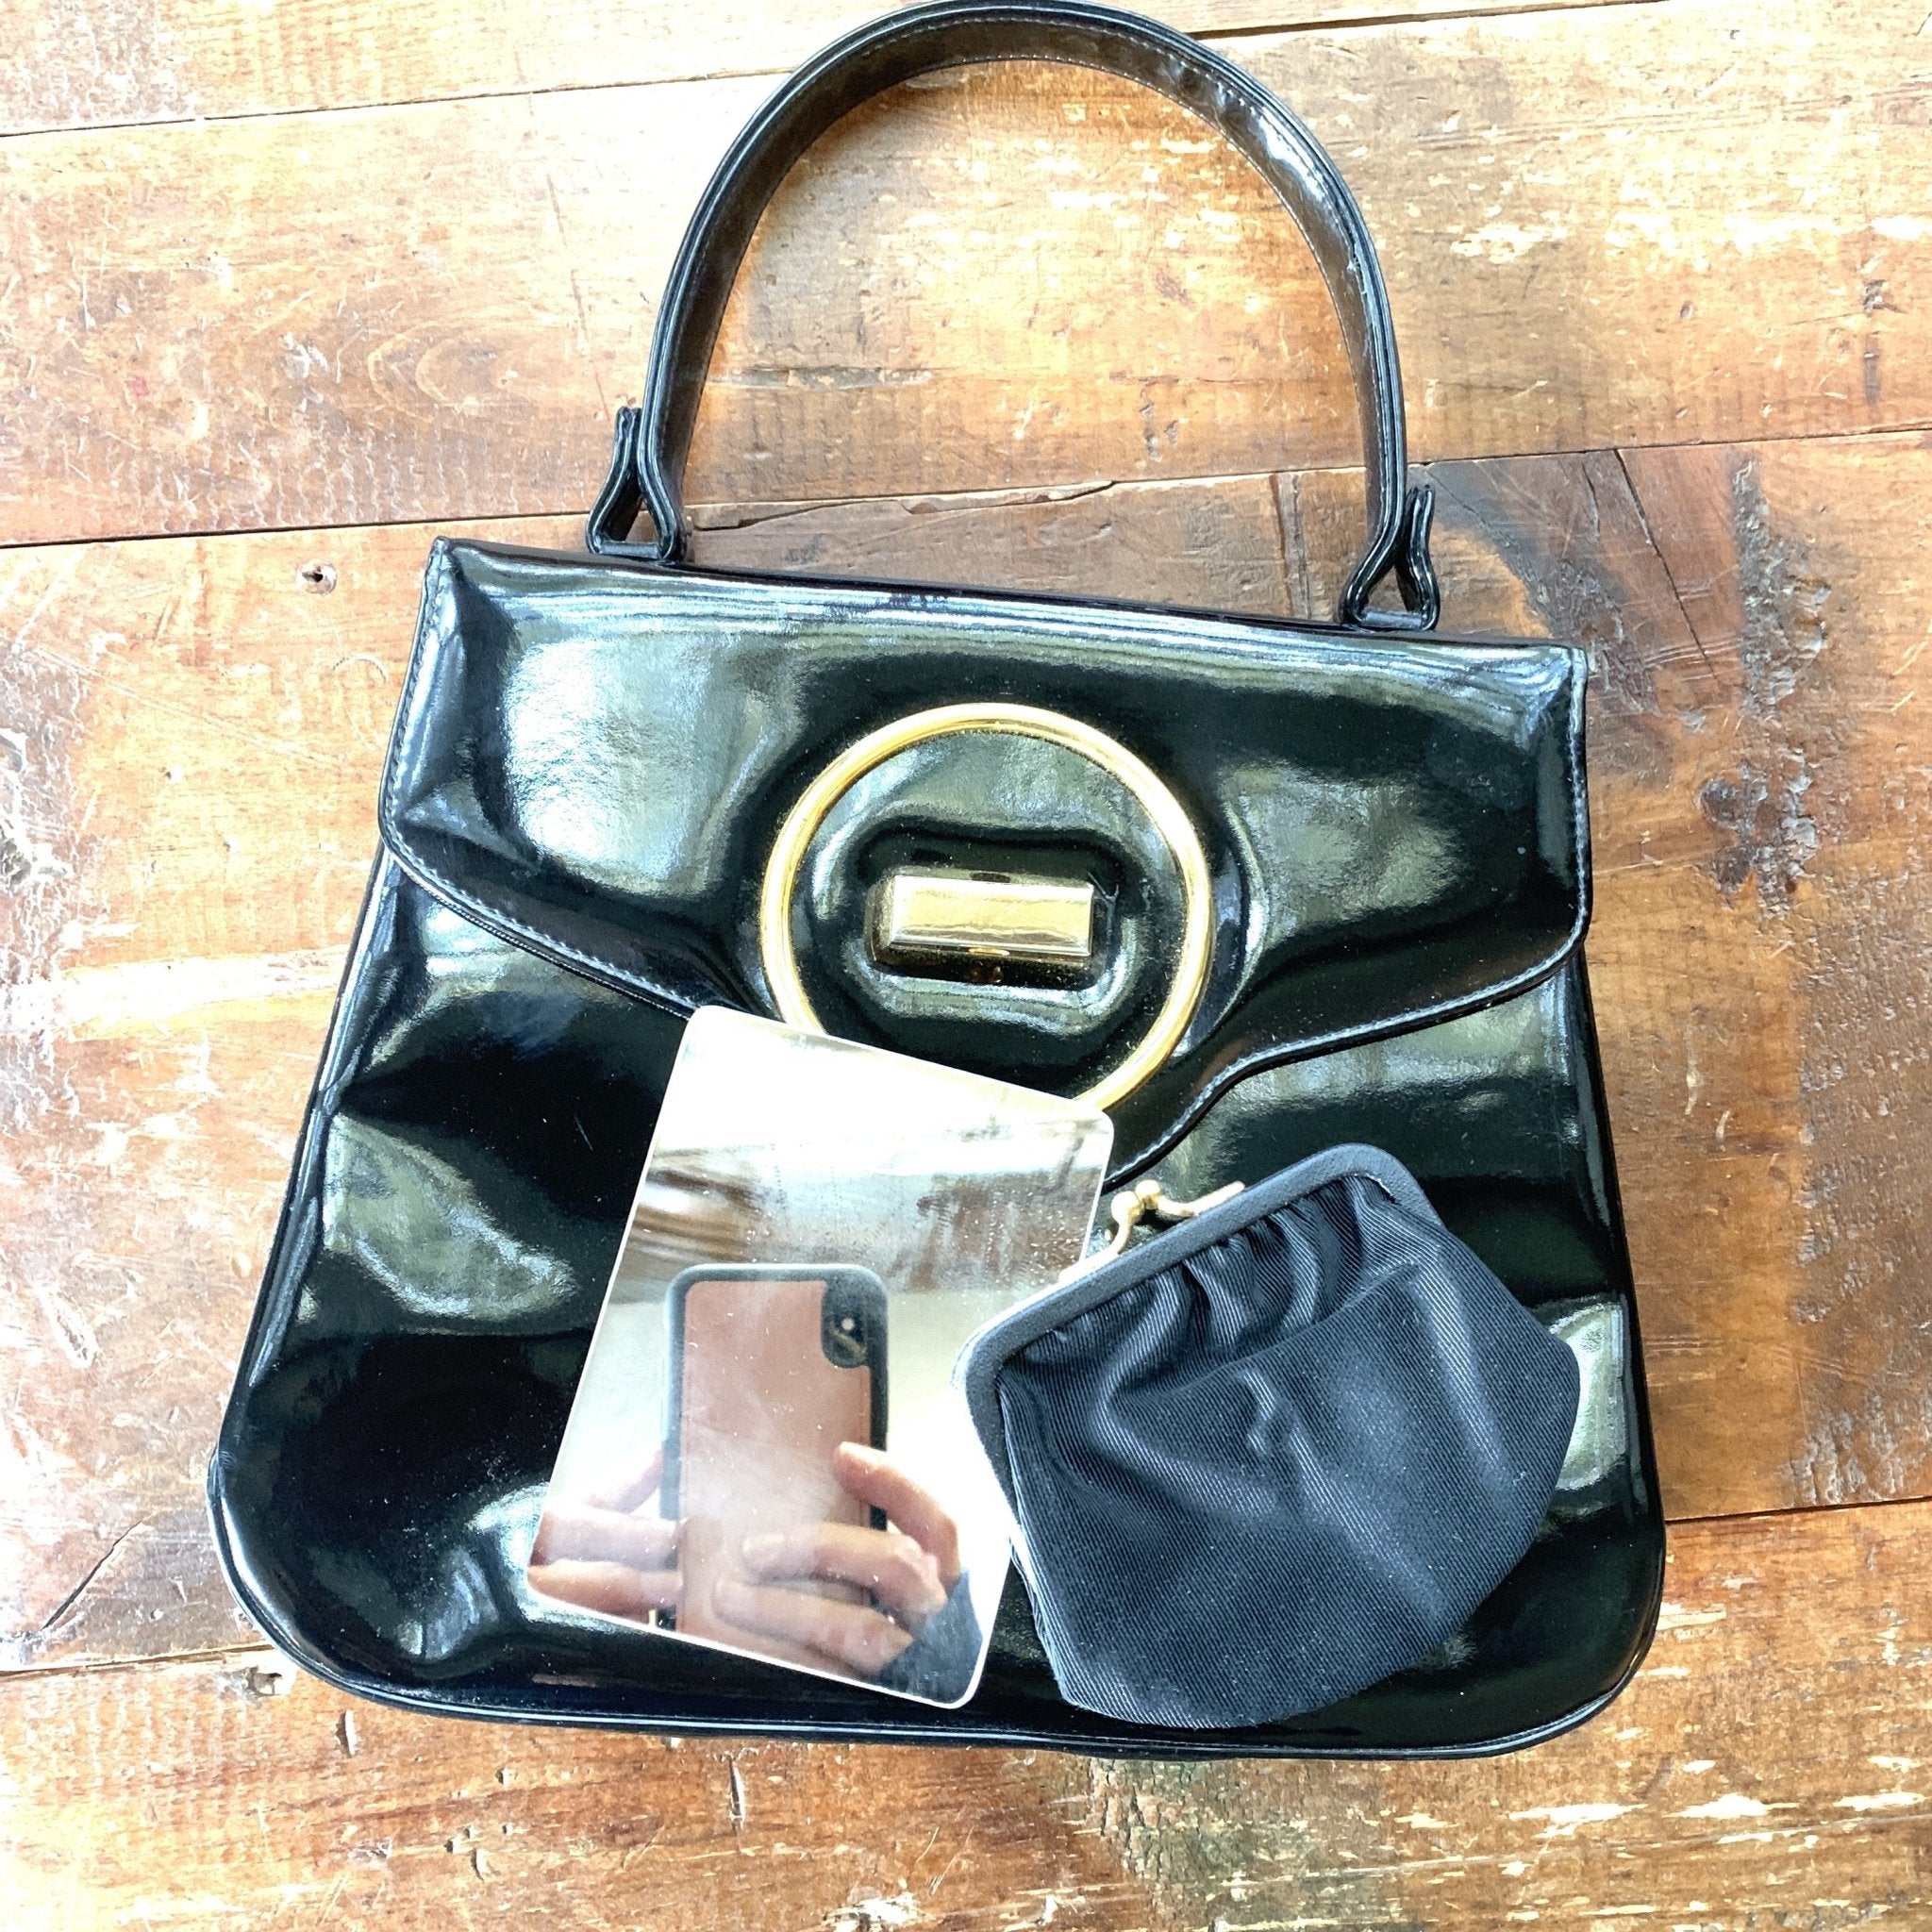 Vintage 1950s Black Patent Leather Coblentz Original Handbag